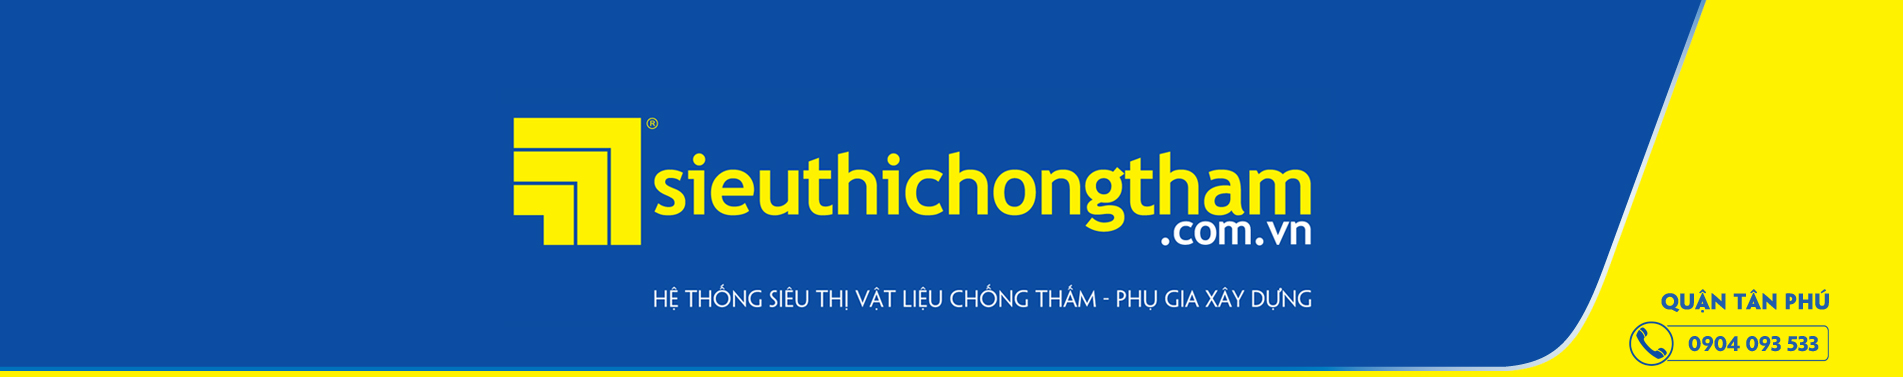 Tan Phu Banner 1